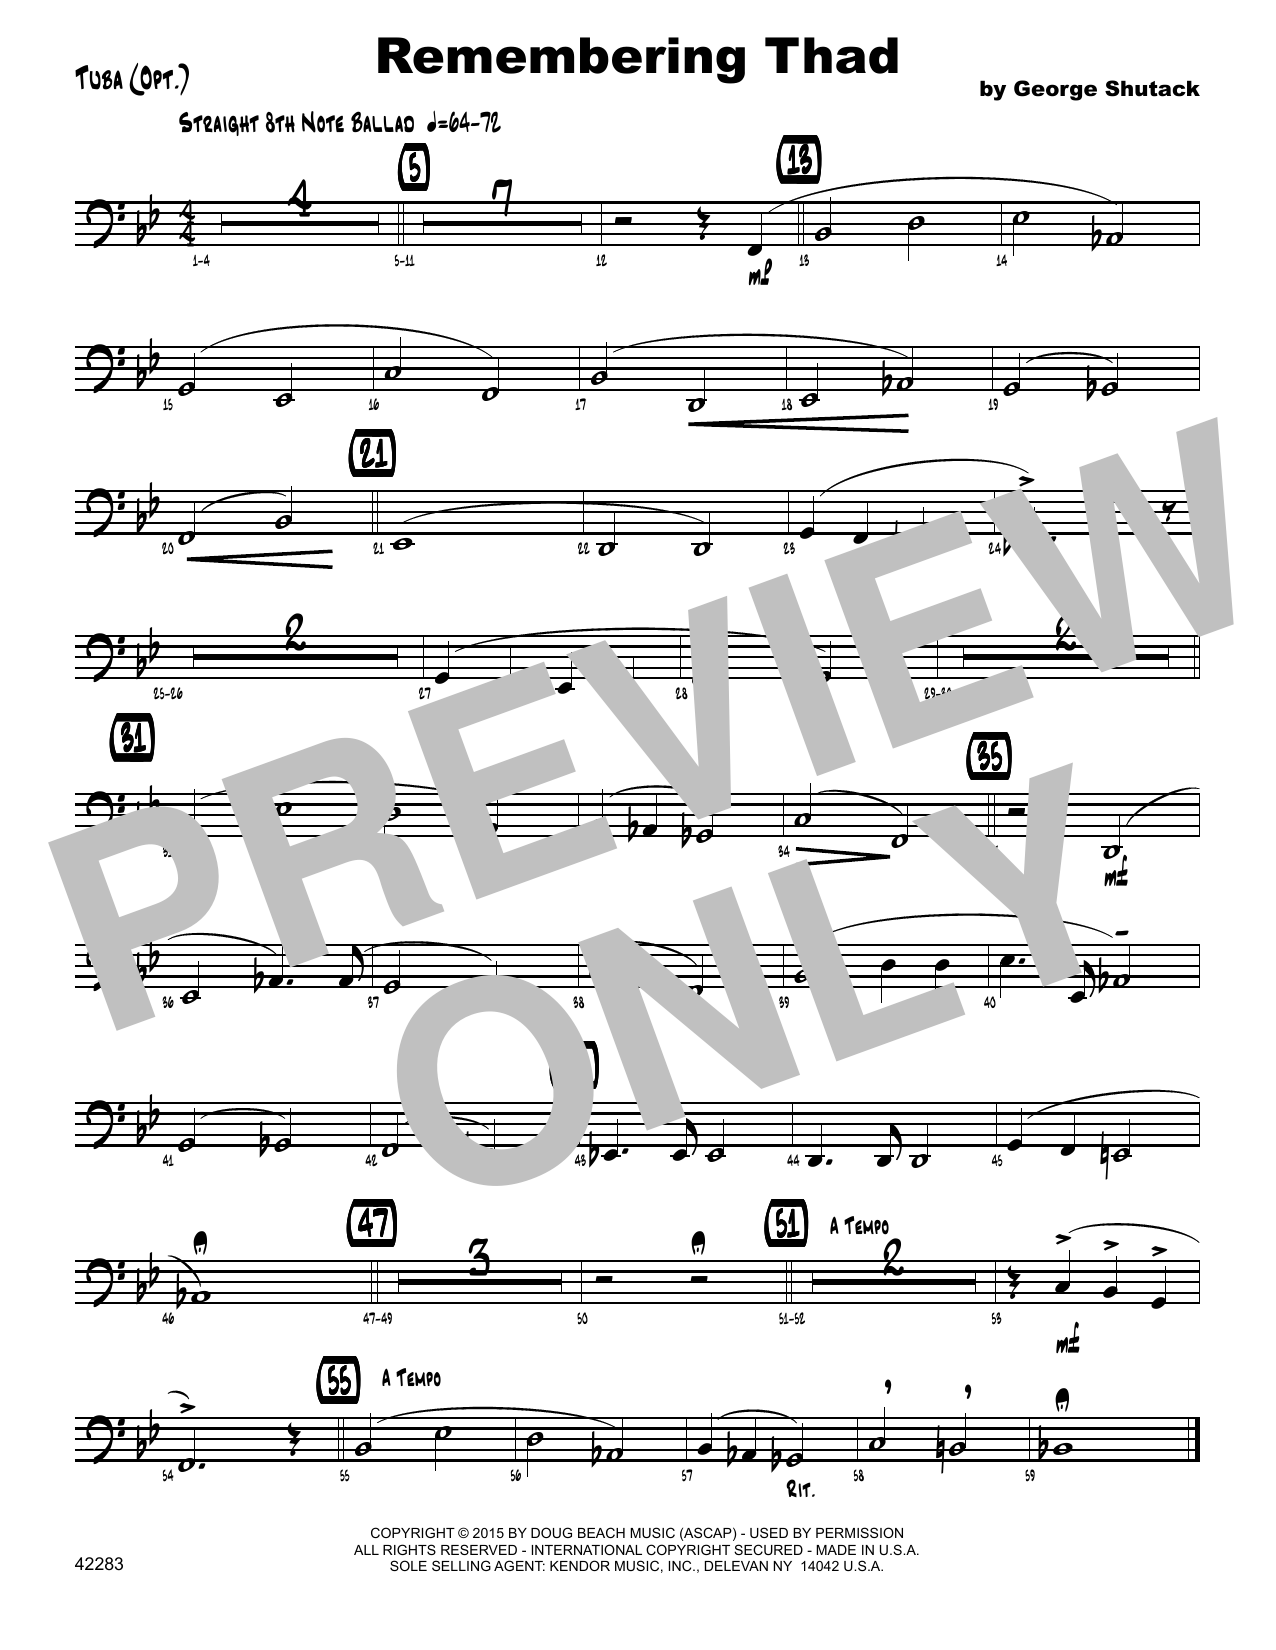 Download George Shutack Remembering Thad - Tuba Sheet Music